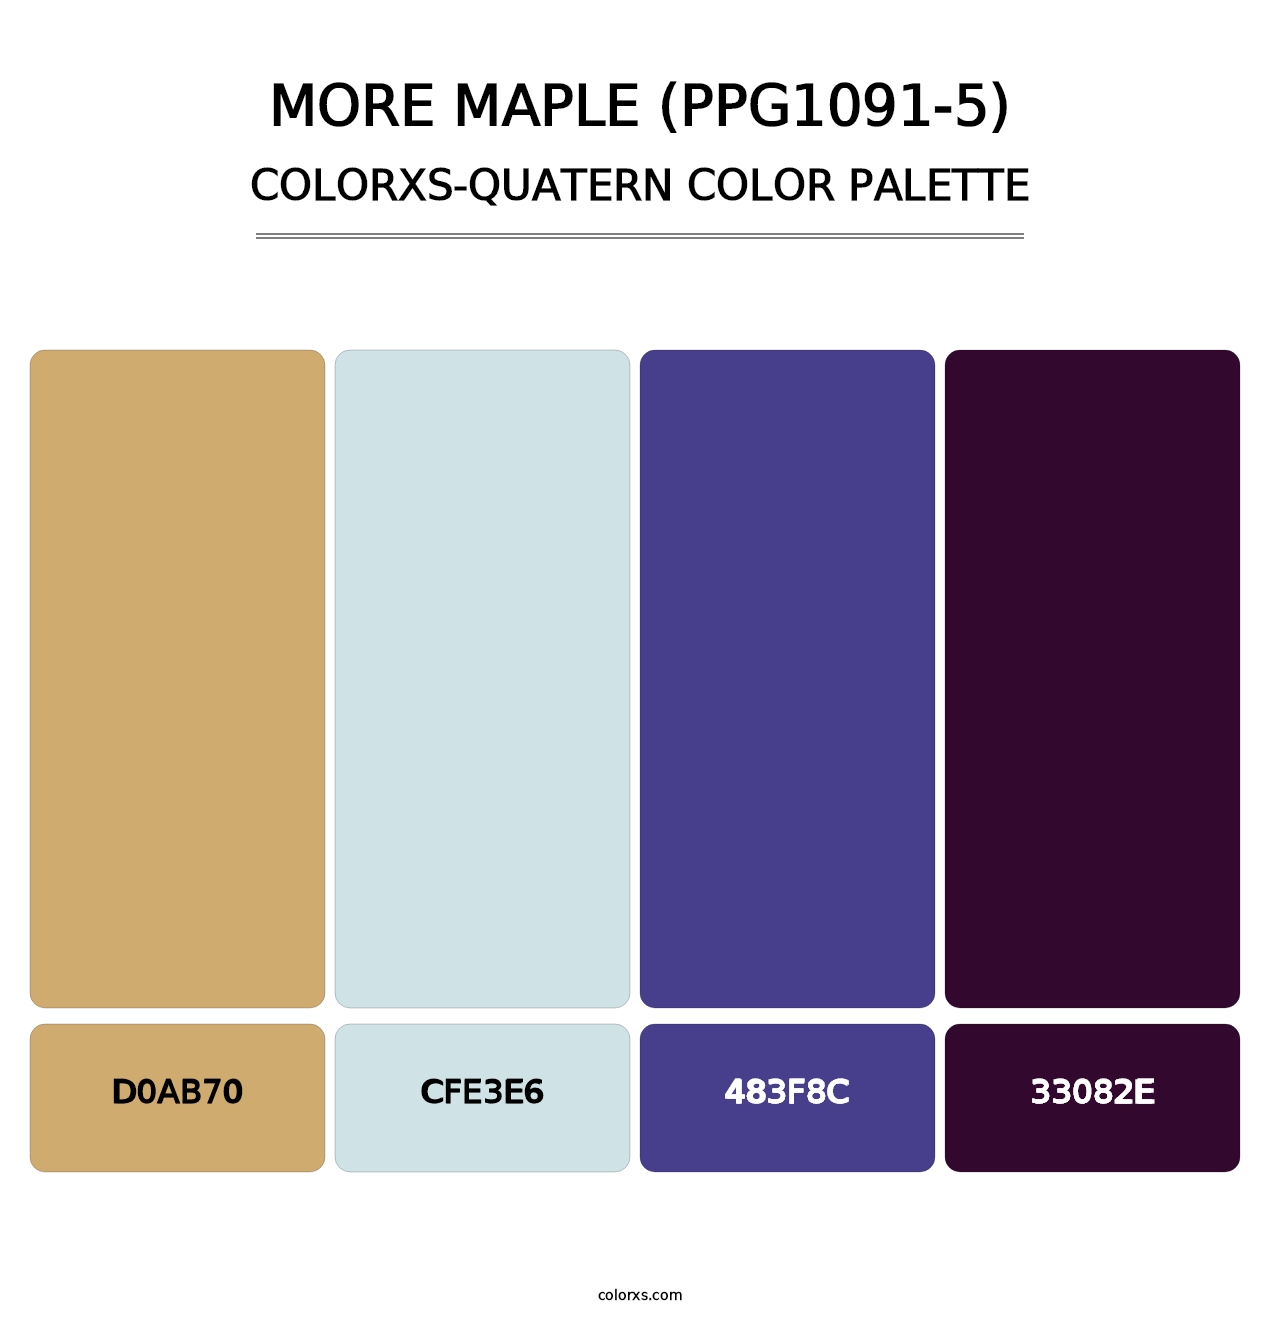 More Maple (PPG1091-5) - Colorxs Quatern Palette